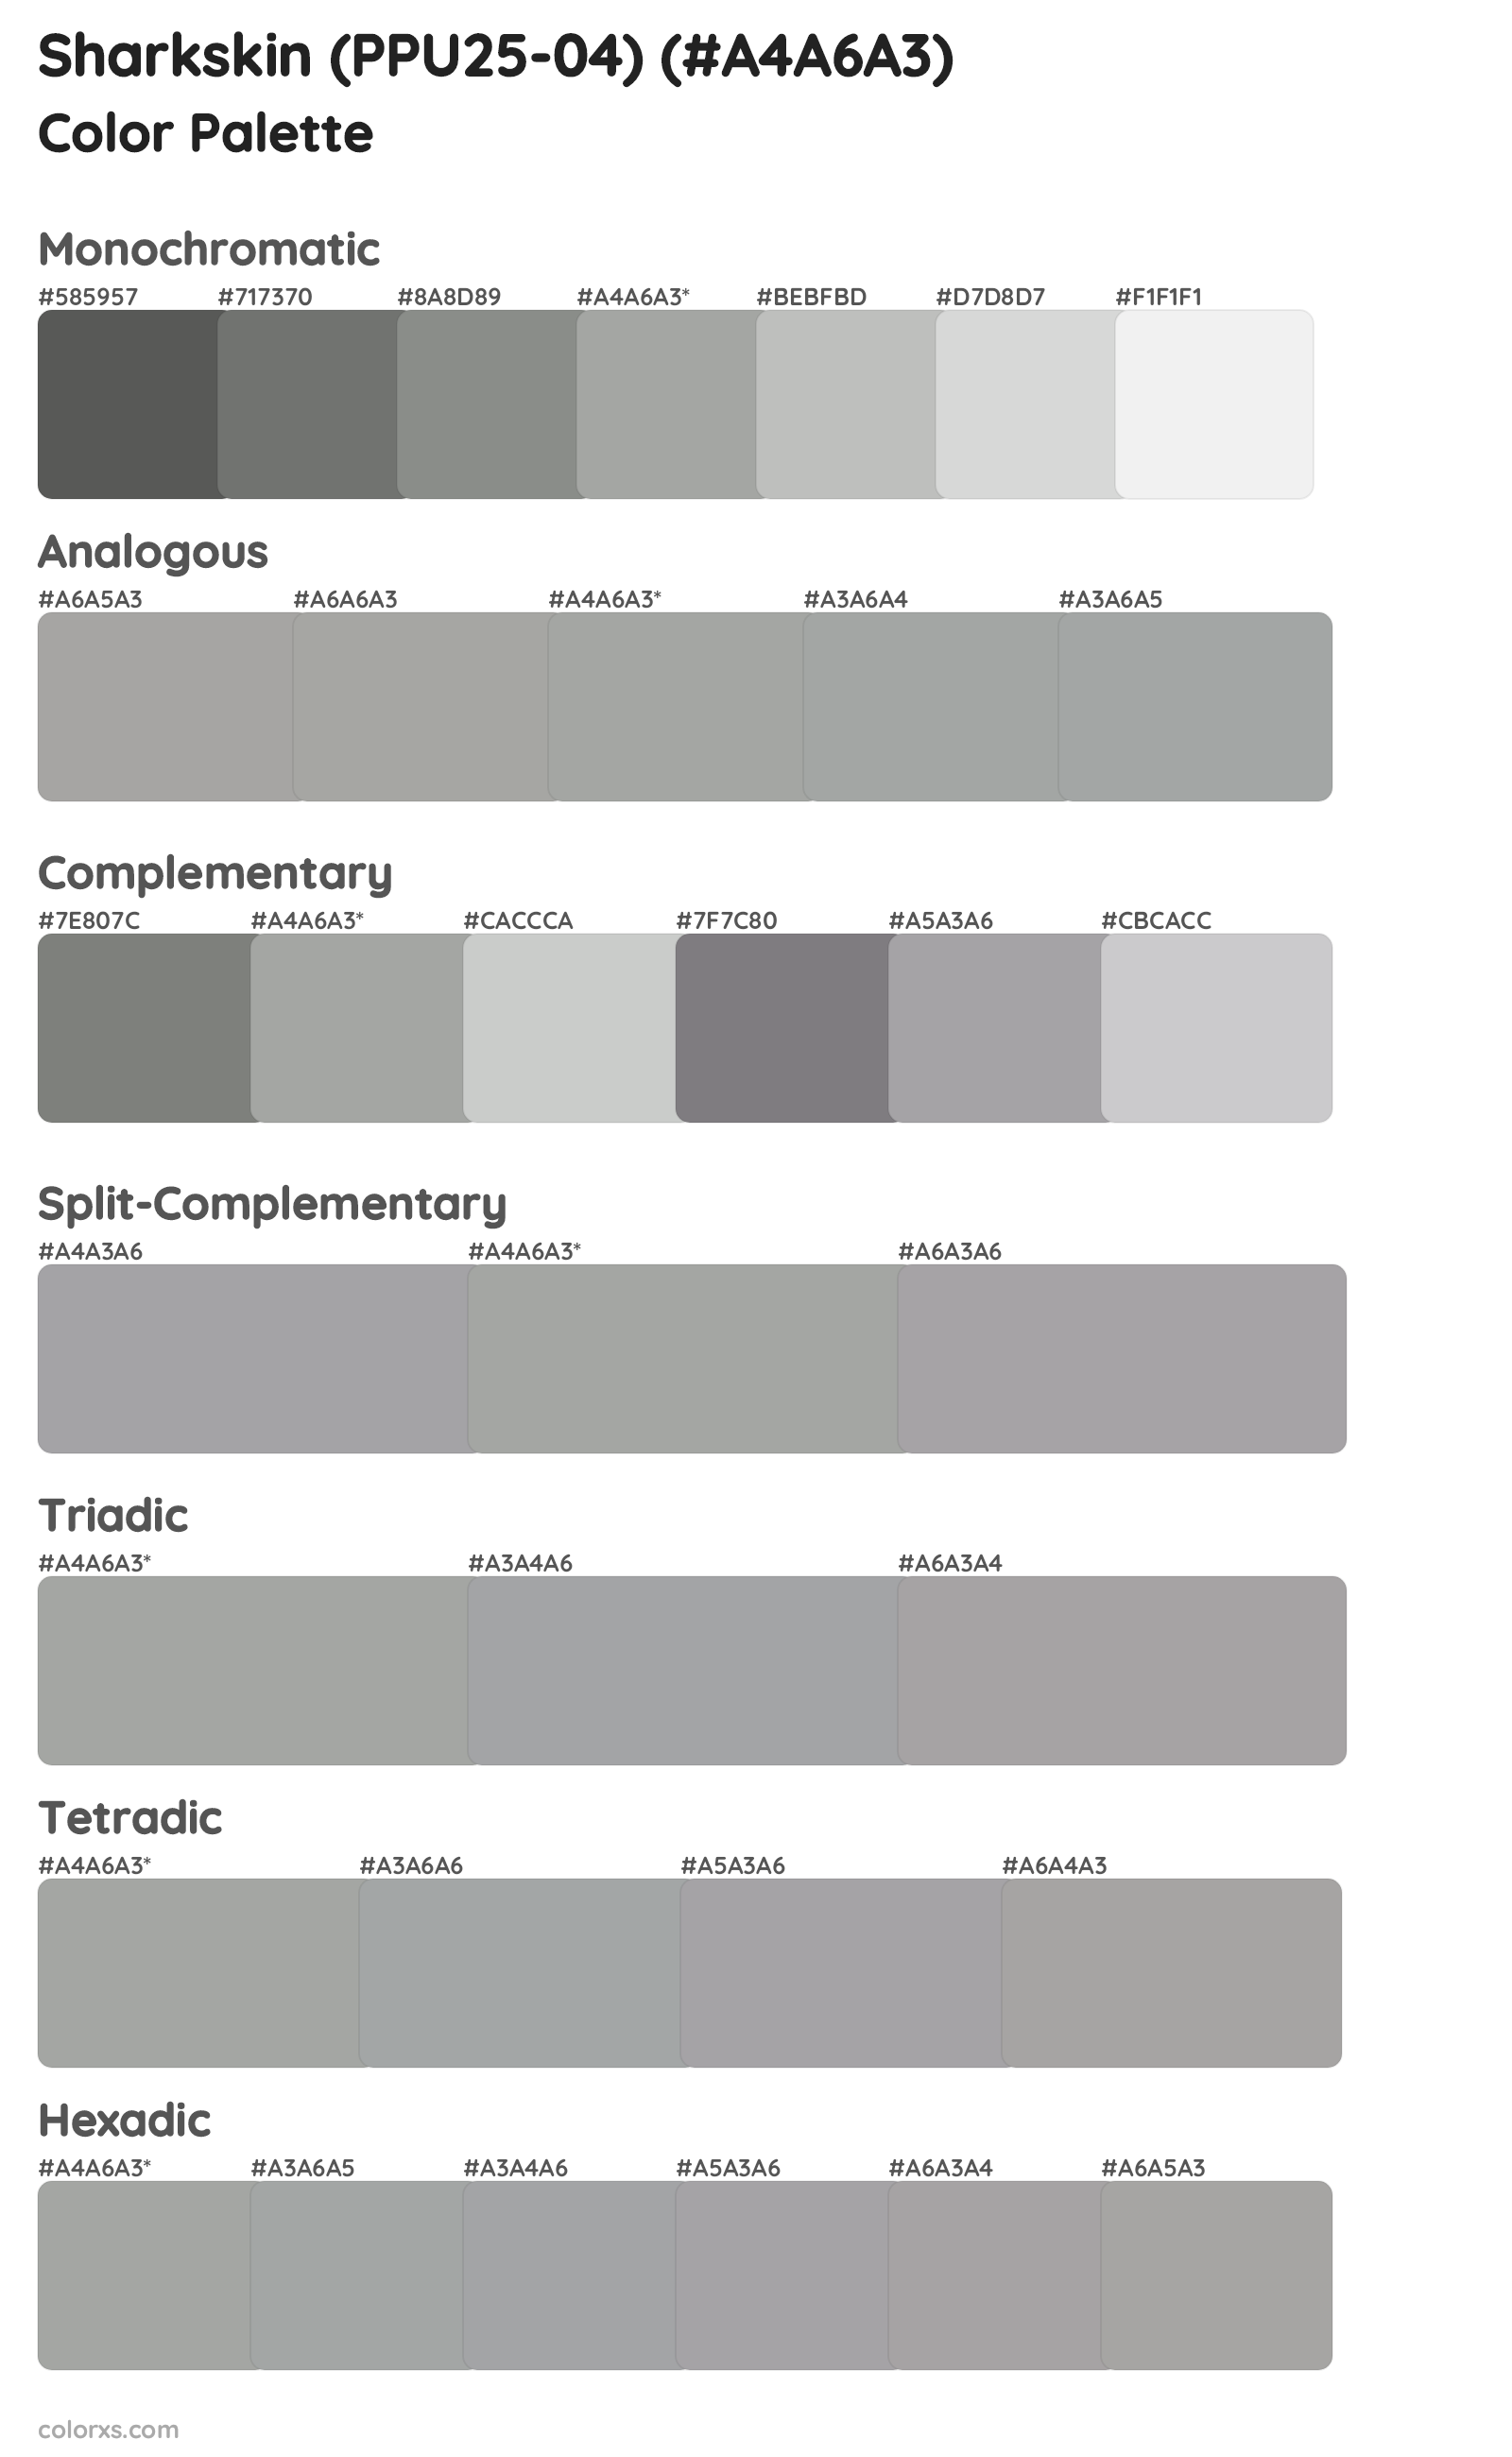 Sharkskin (PPU25-04) Color Scheme Palettes